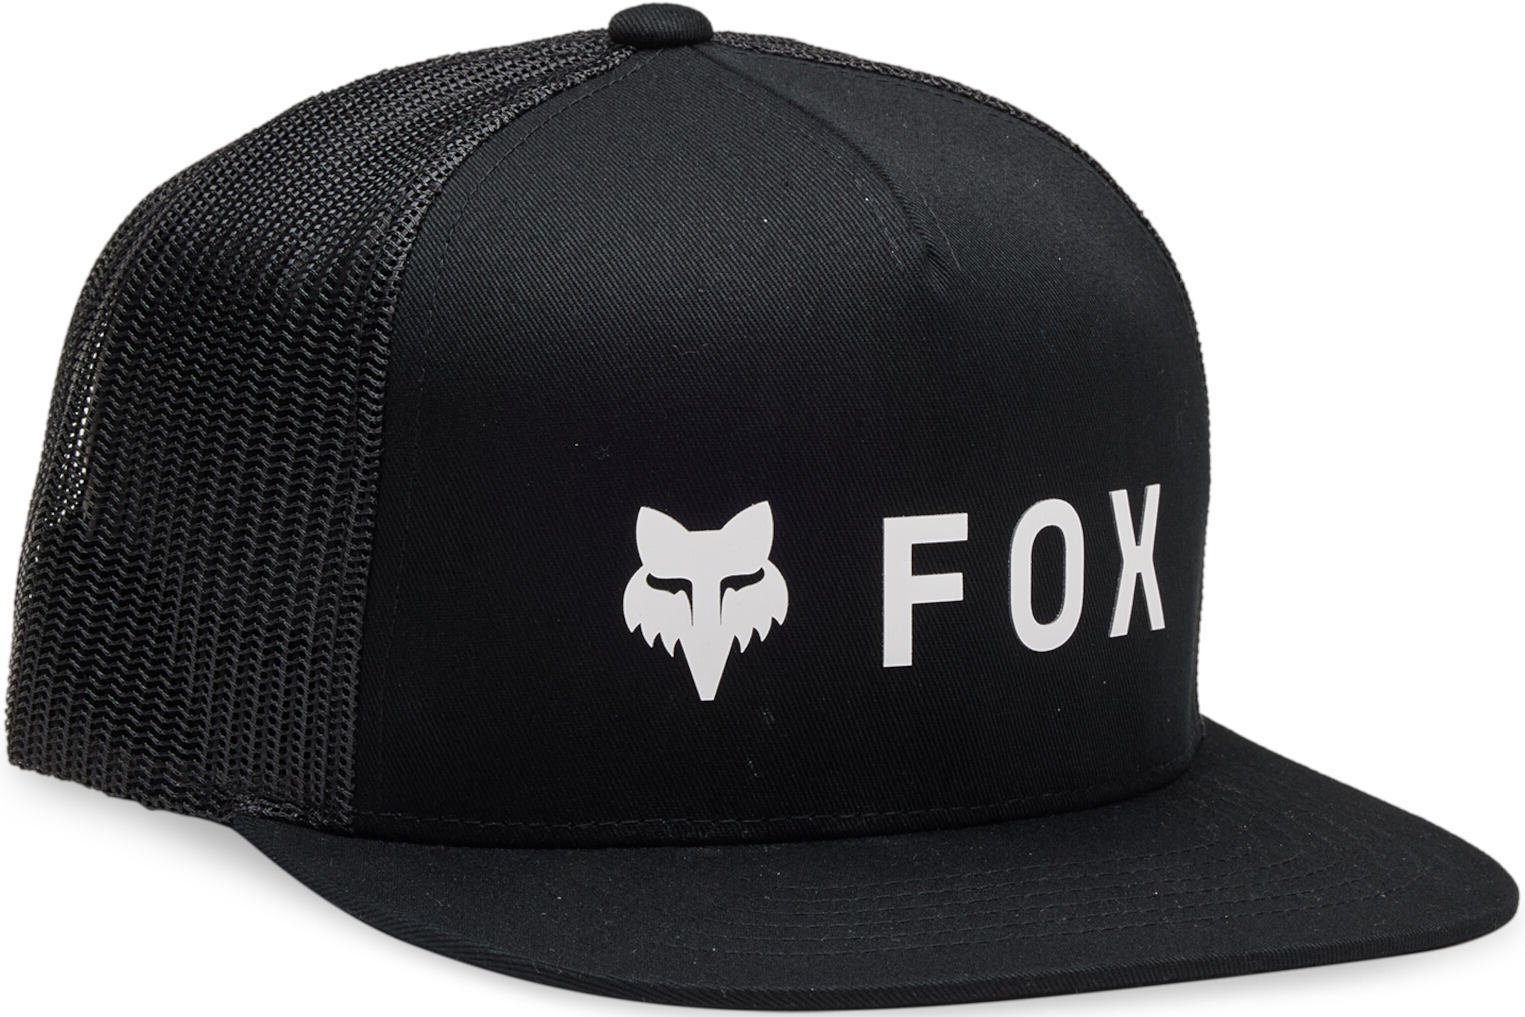 Fox Outdoorhut Absolute Mesh Snapback Kappe Black/White | Hüte